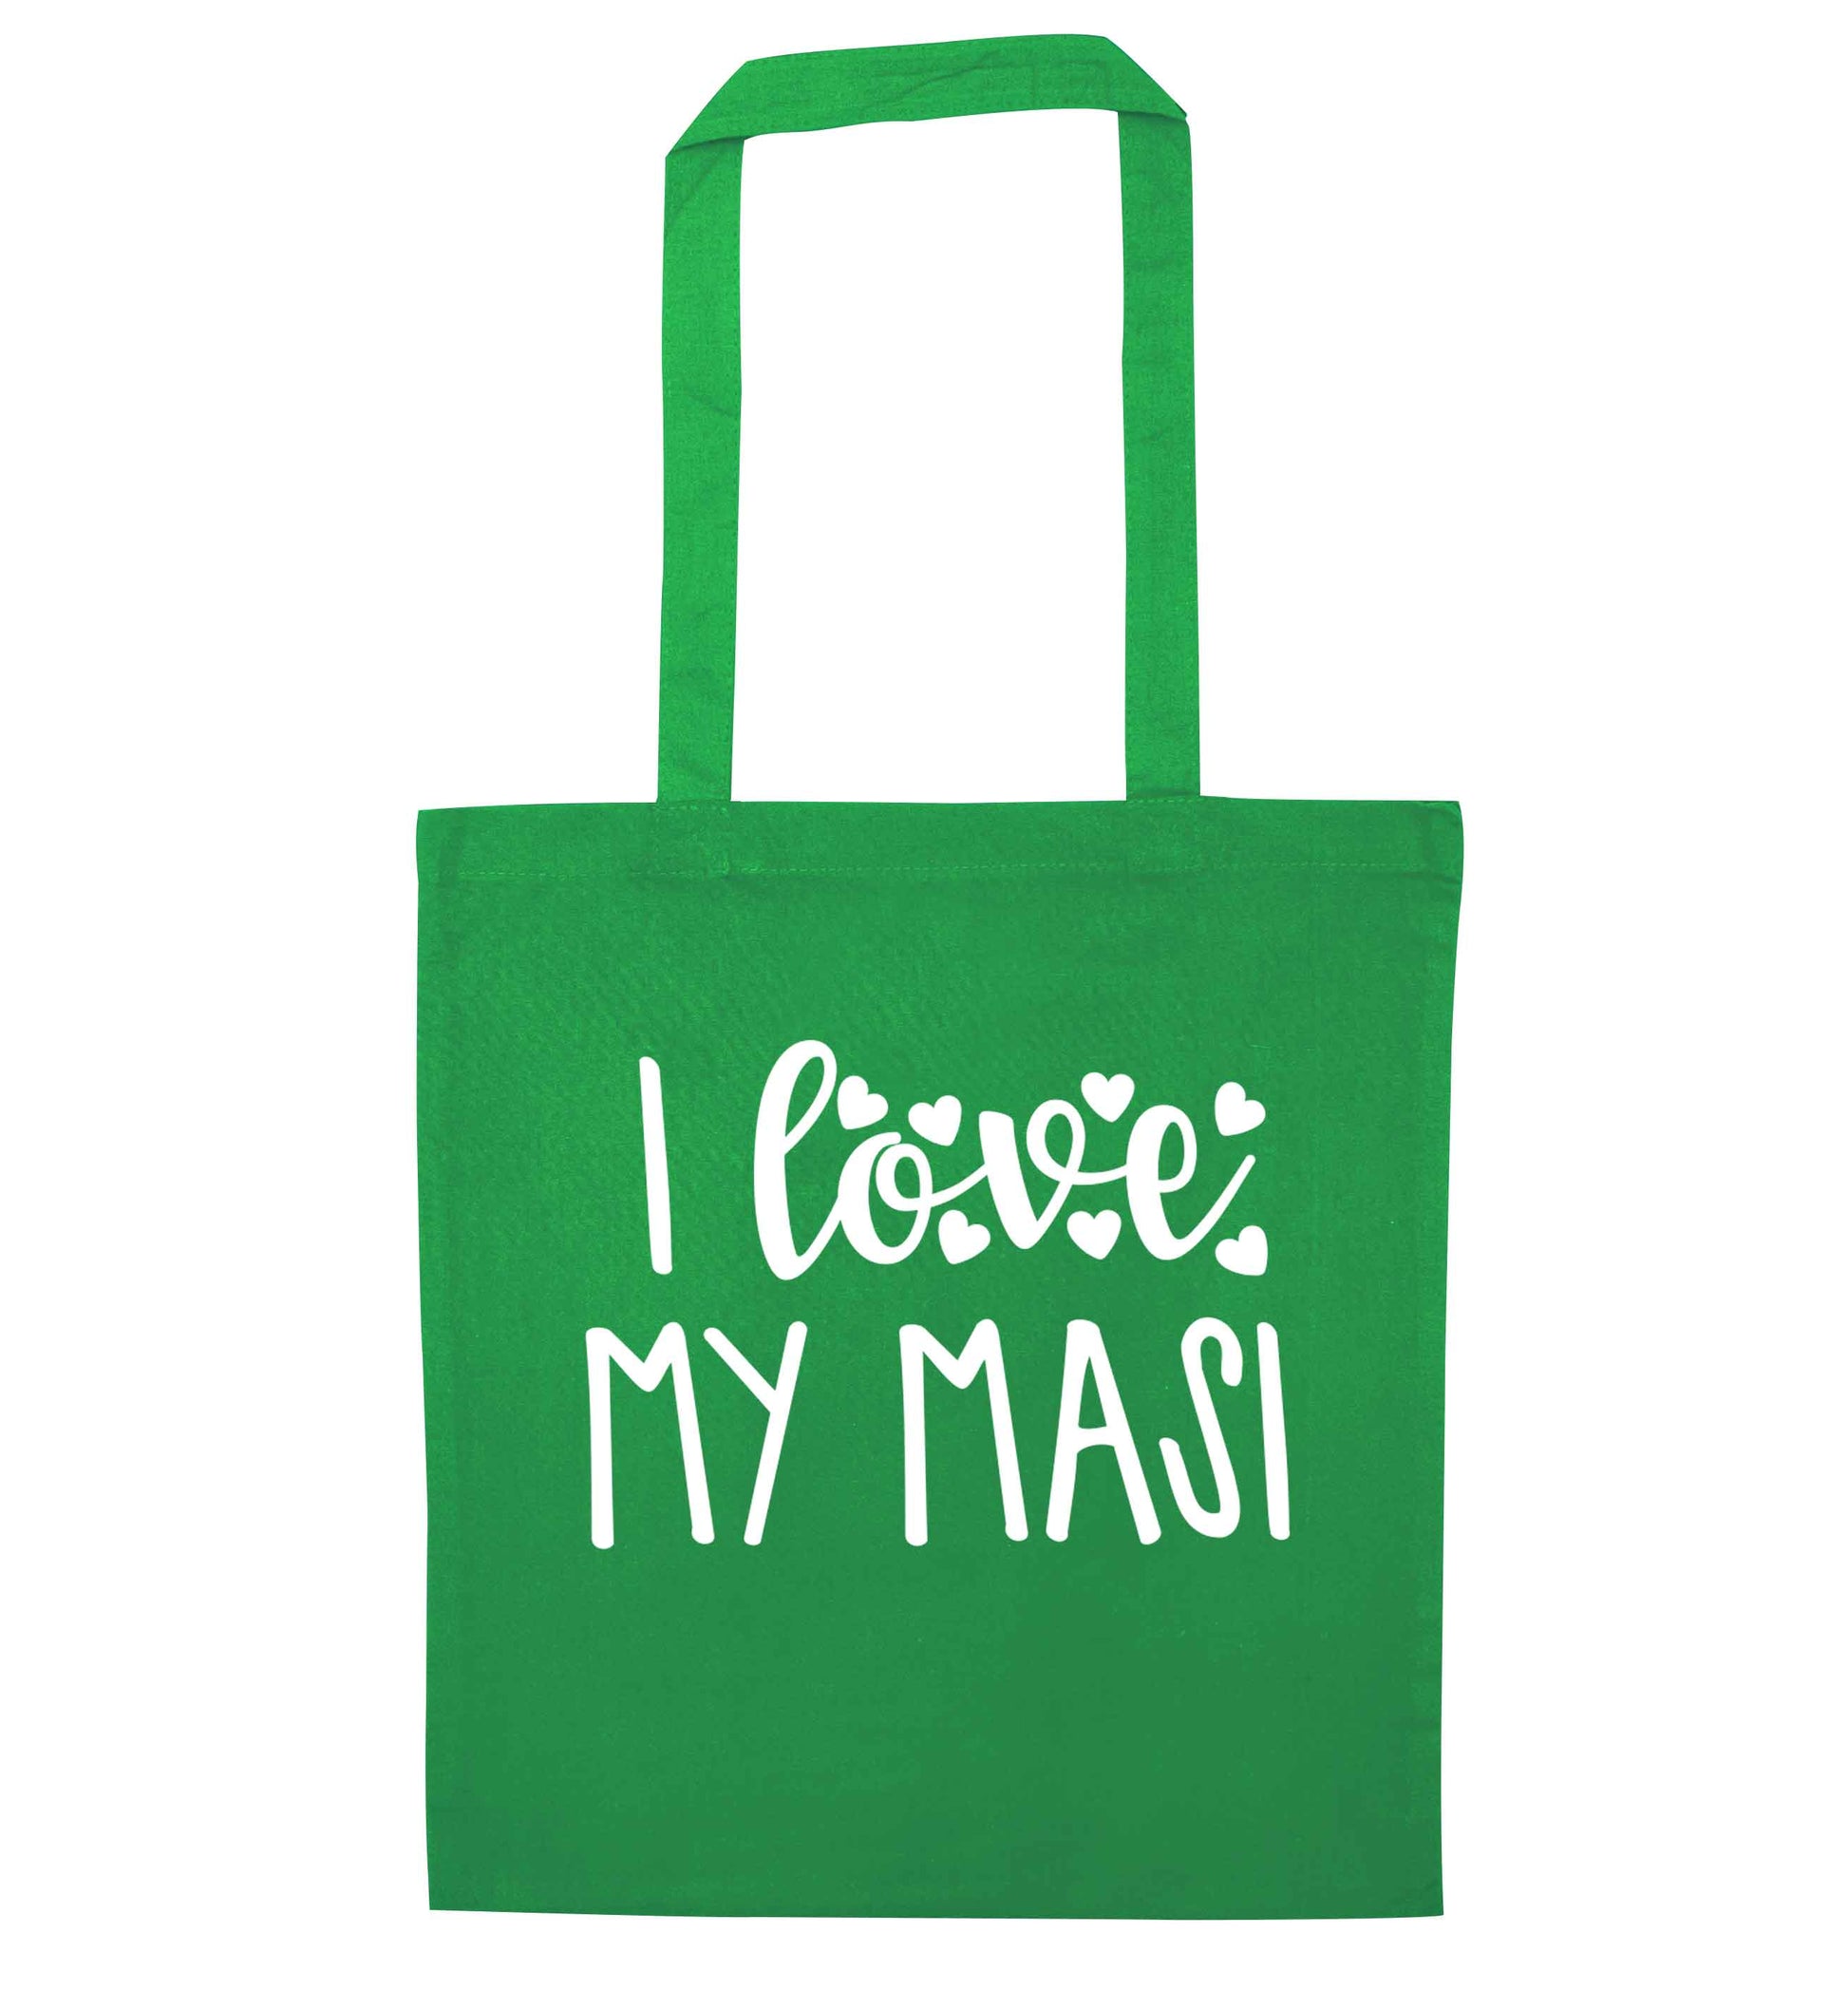 I love my masi green tote bag